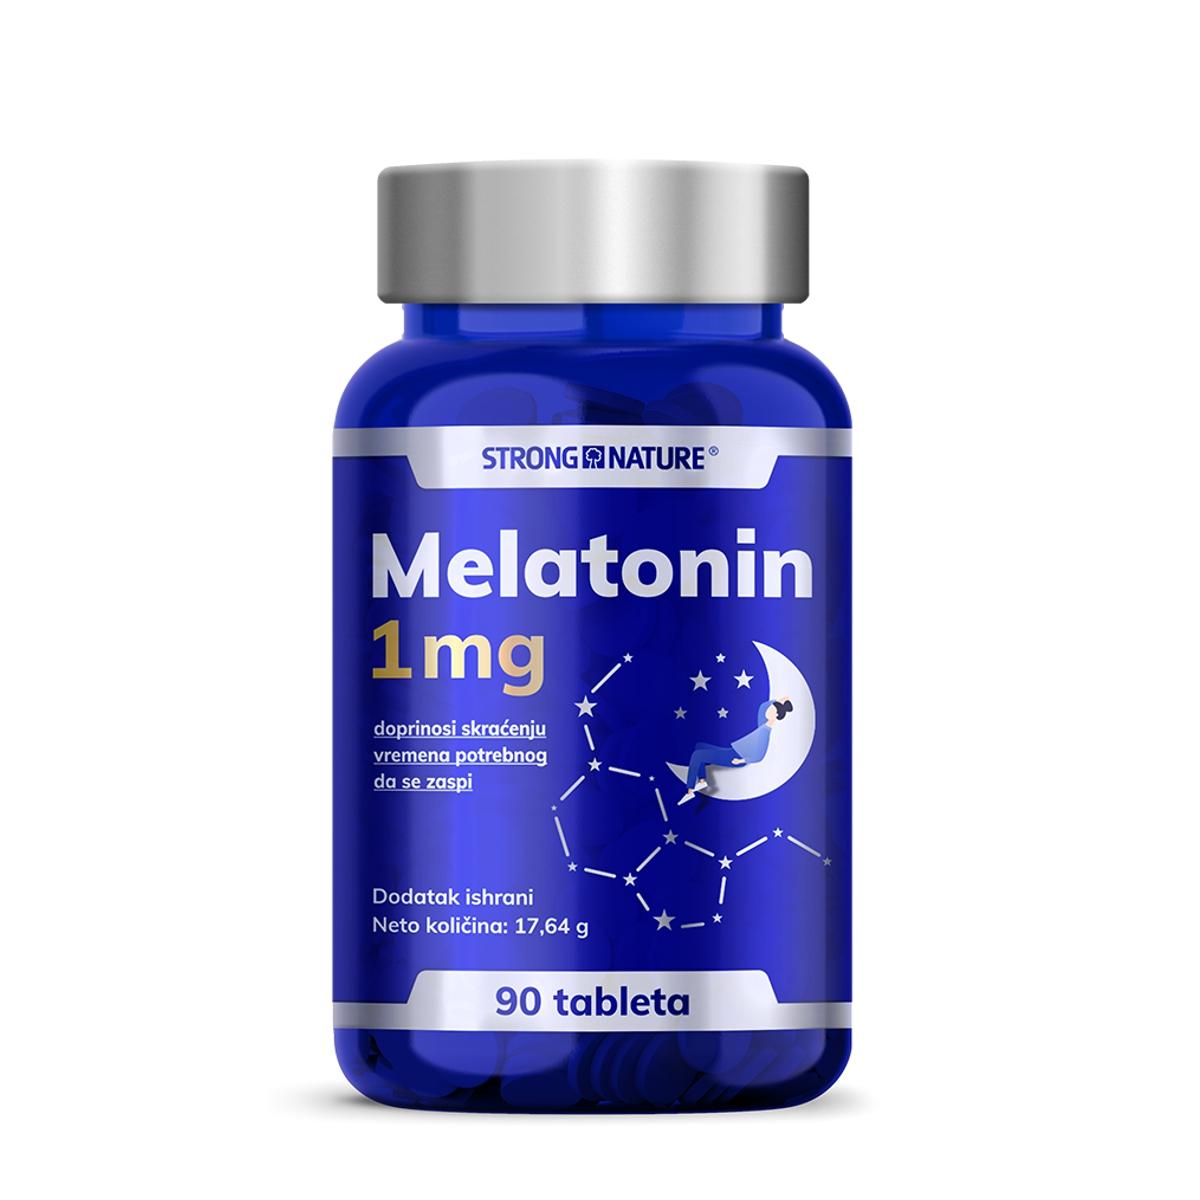 STRONG NATURE Melatonin 1mg 90 tableta